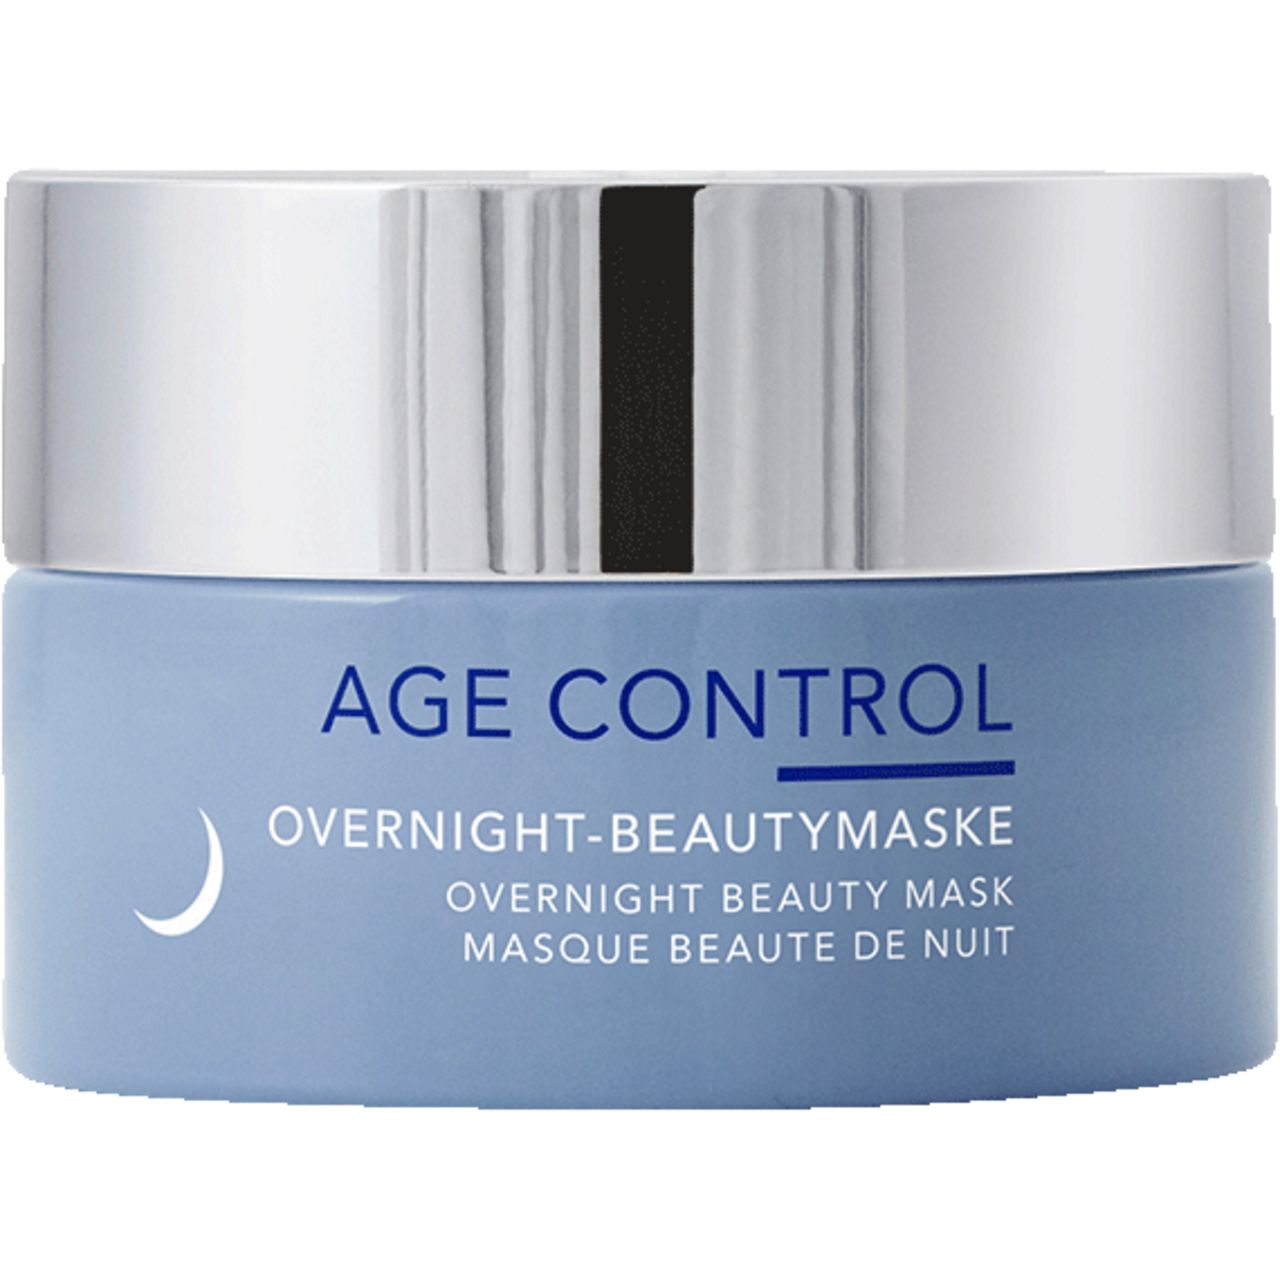 Charlotte Meentzen, Age Control Overnight-Beautymaske